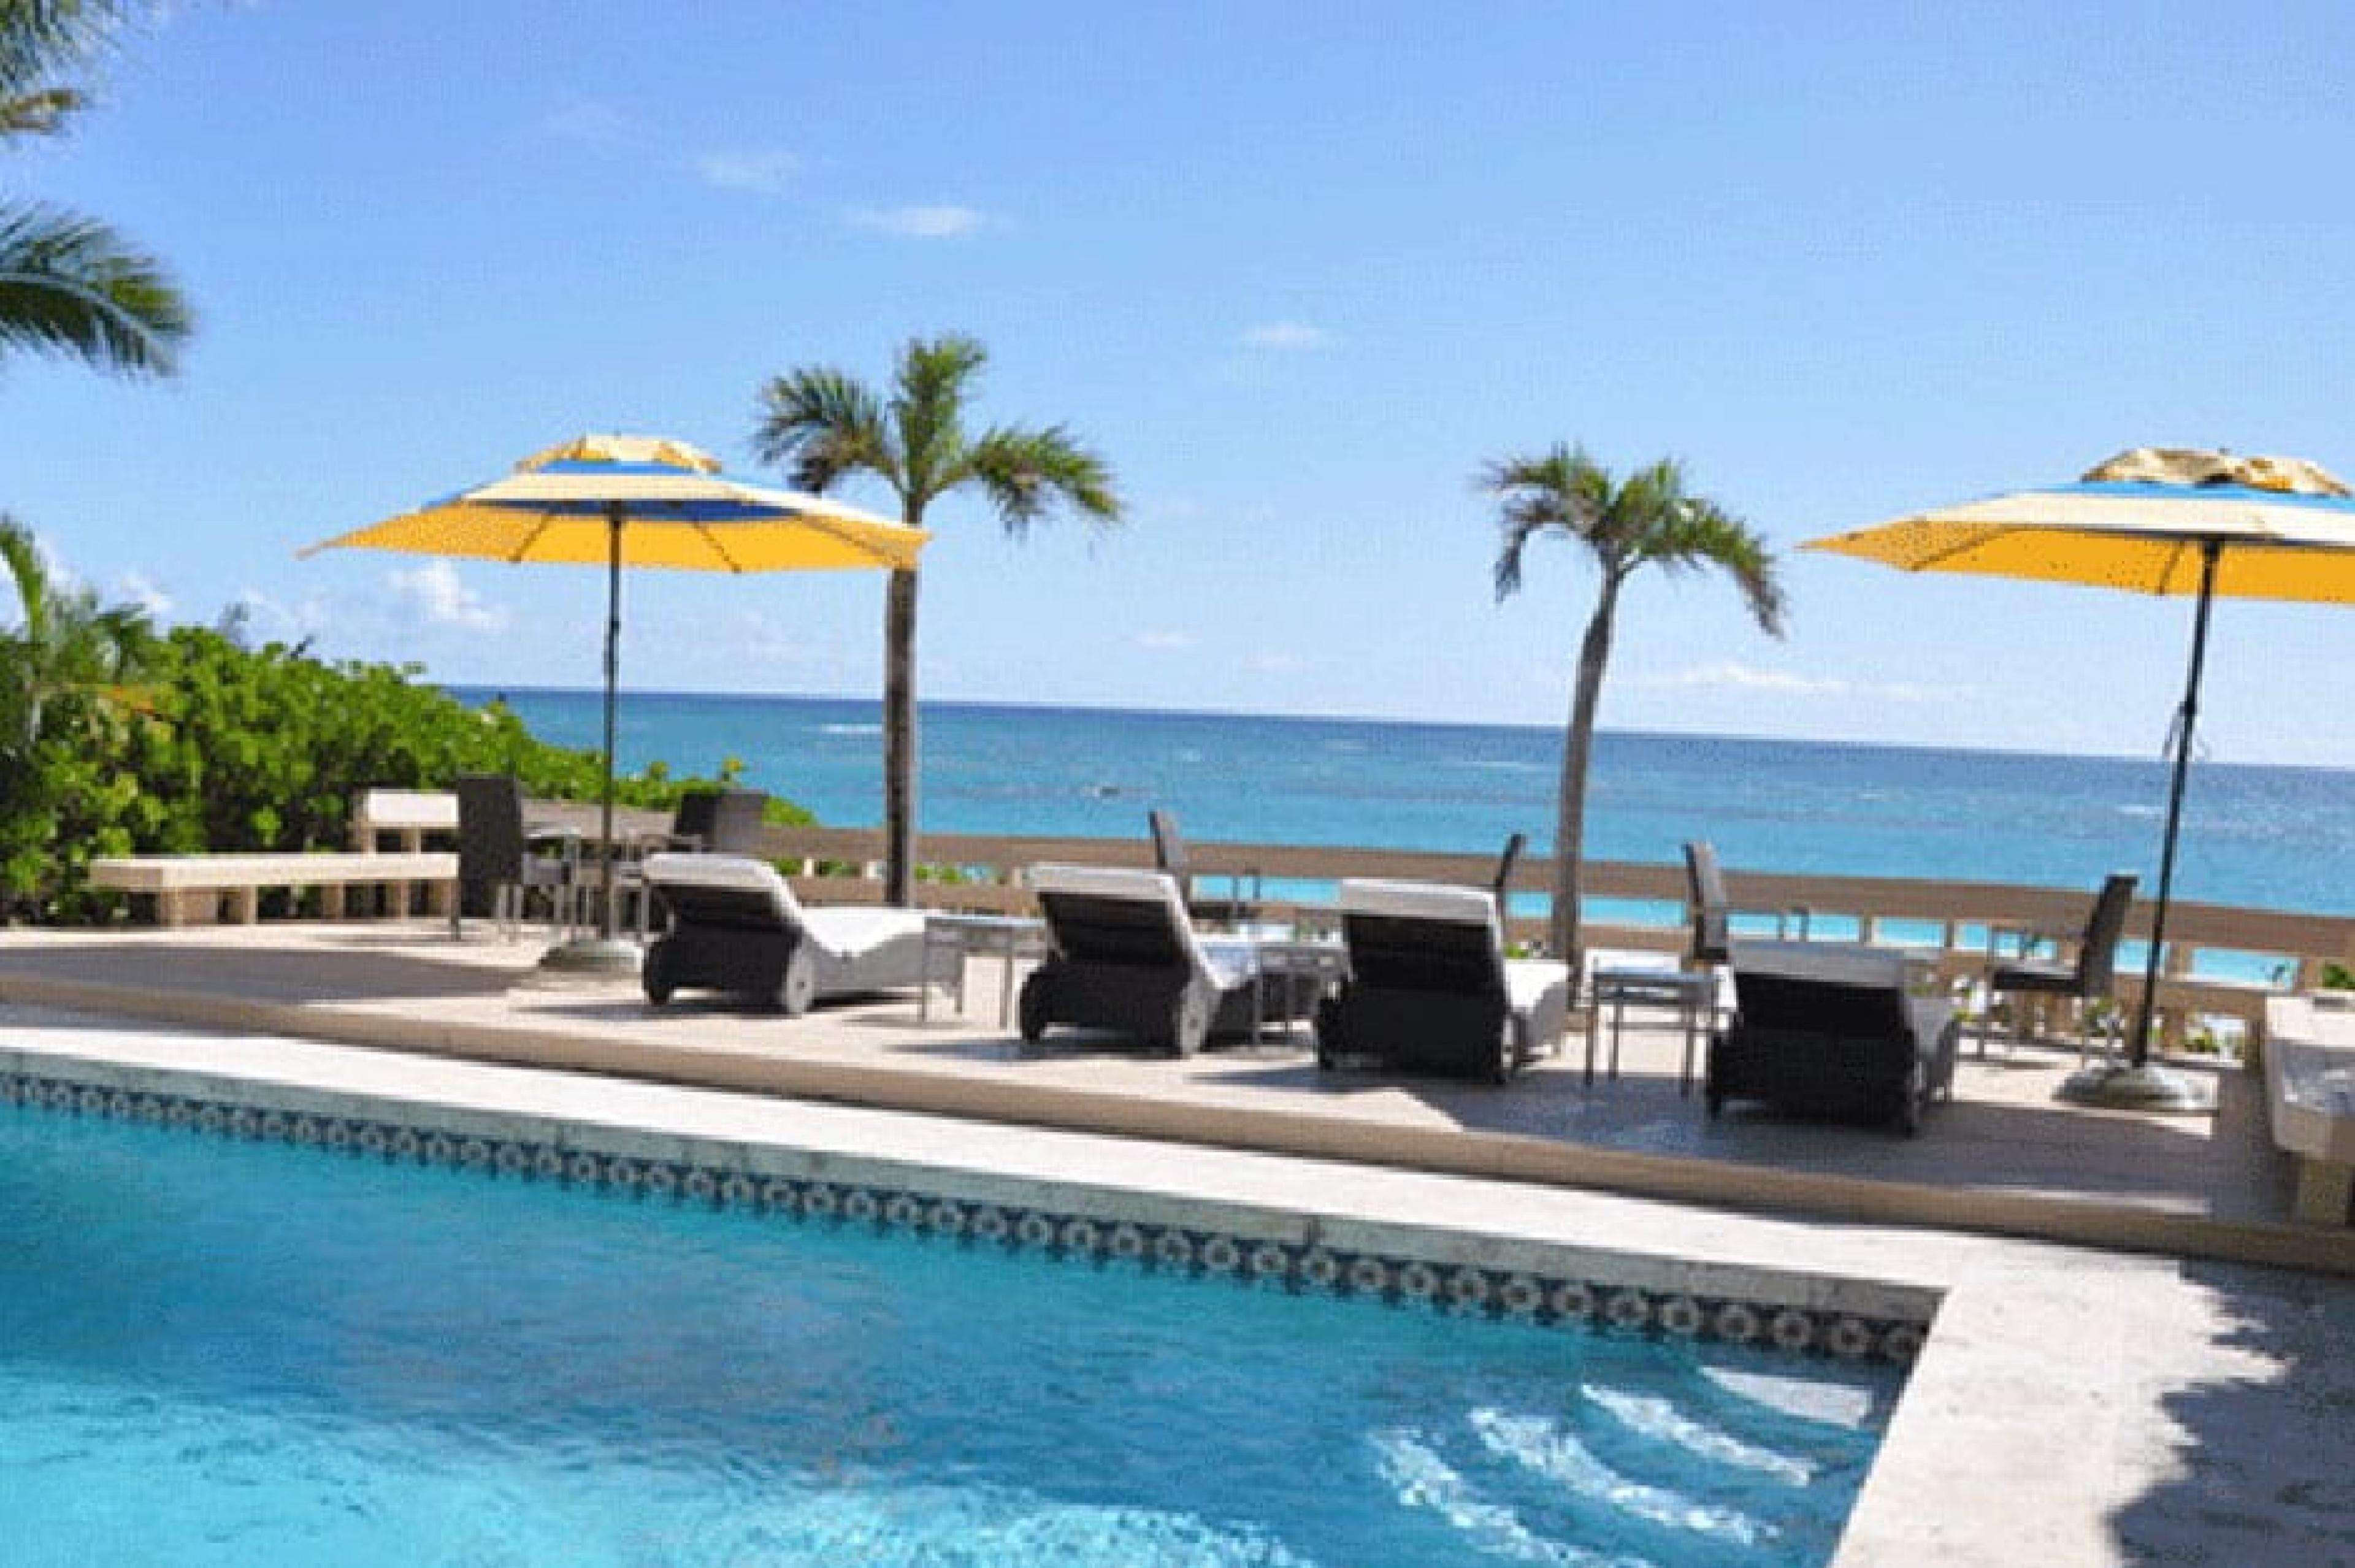 Pool Lounge at Runaway Hill Club, Harbour Island, Caribbean